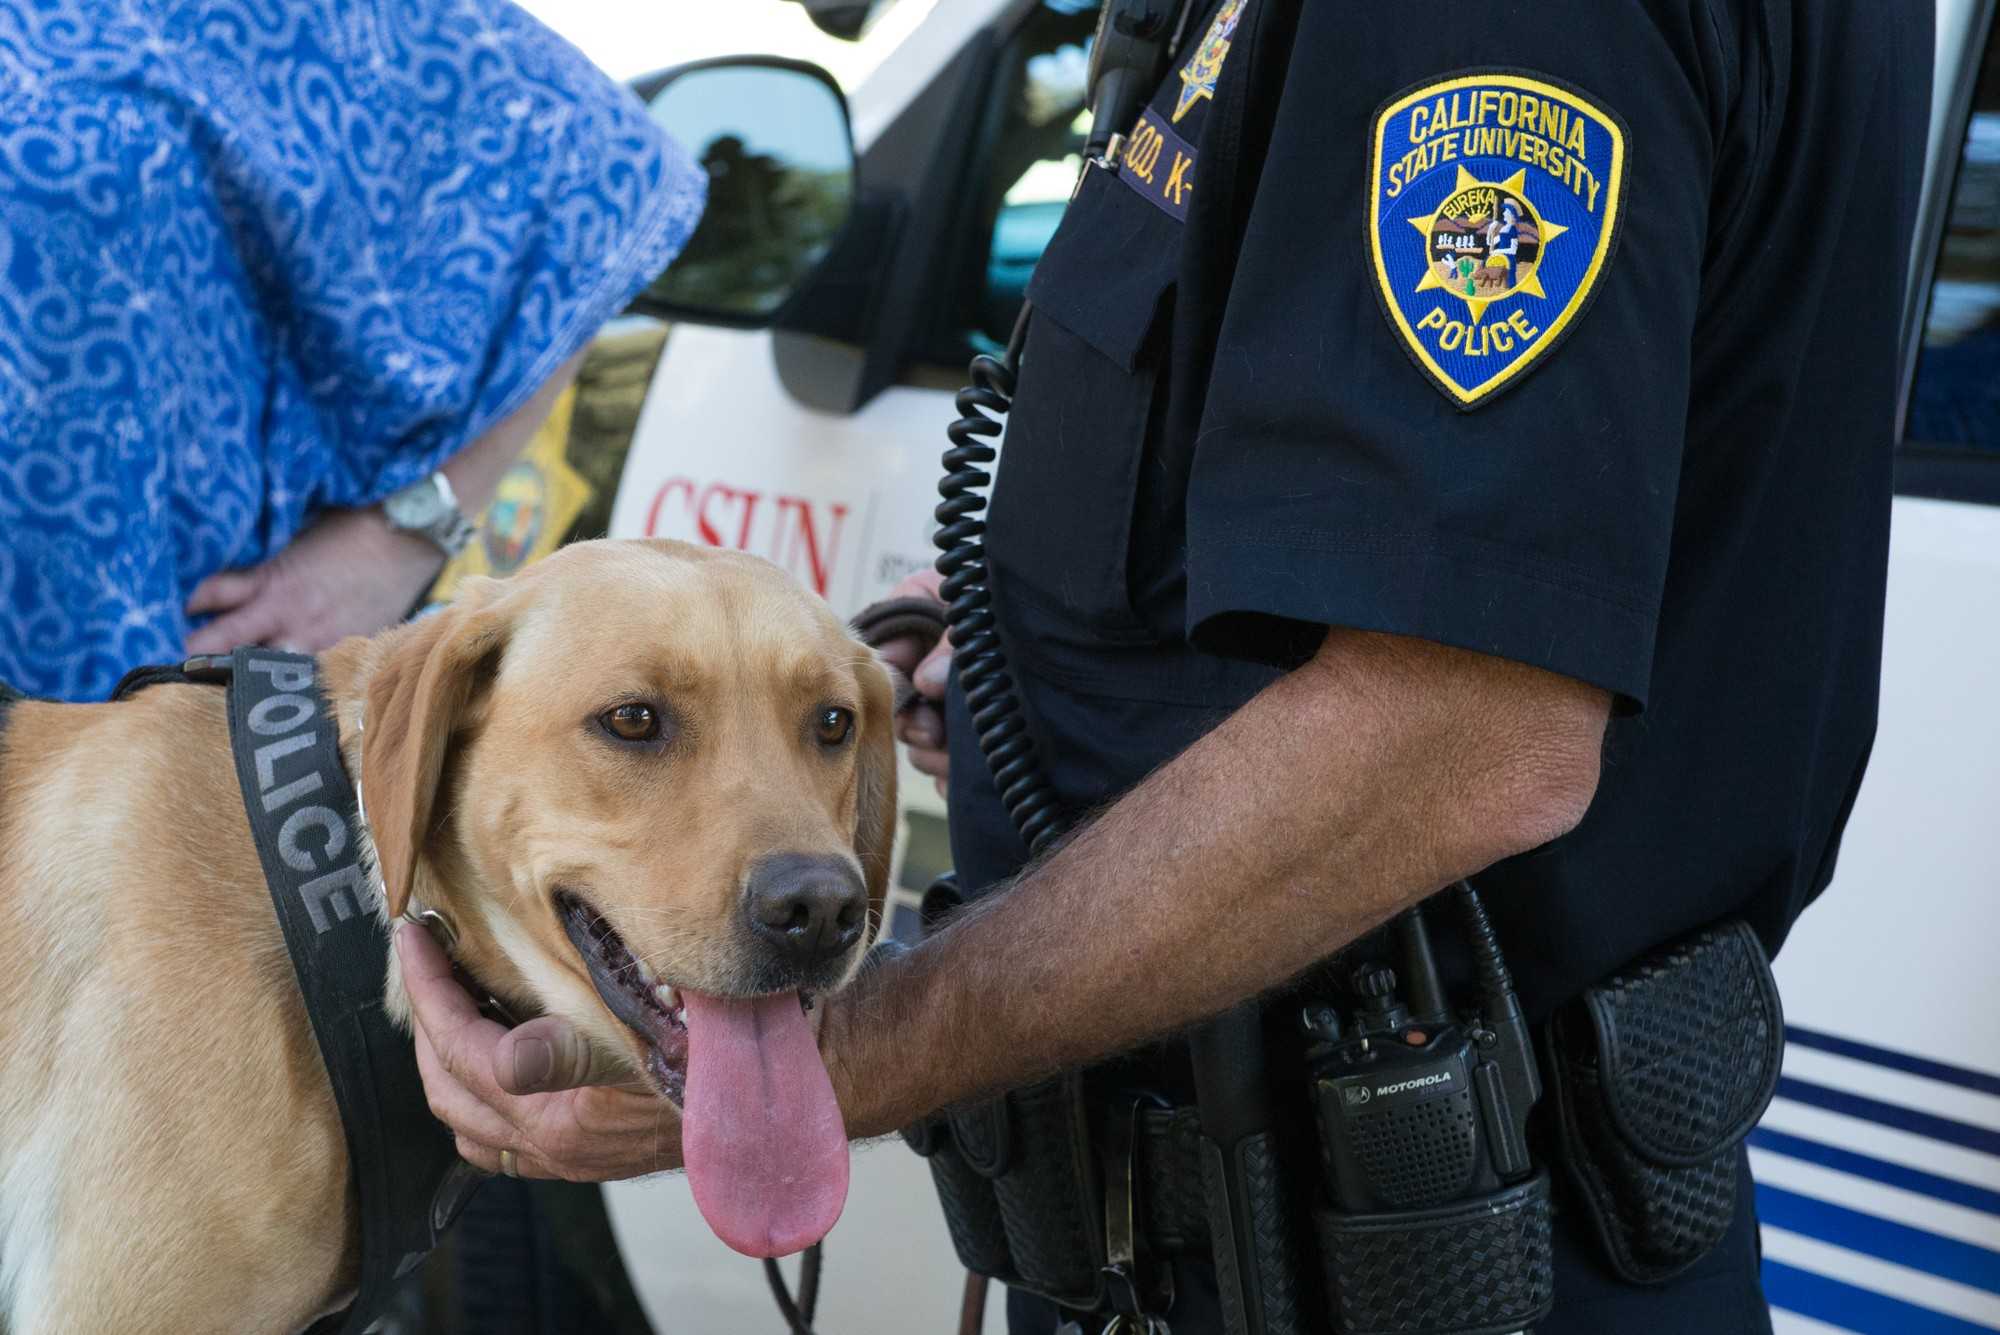 Police+dog+shown+grinning